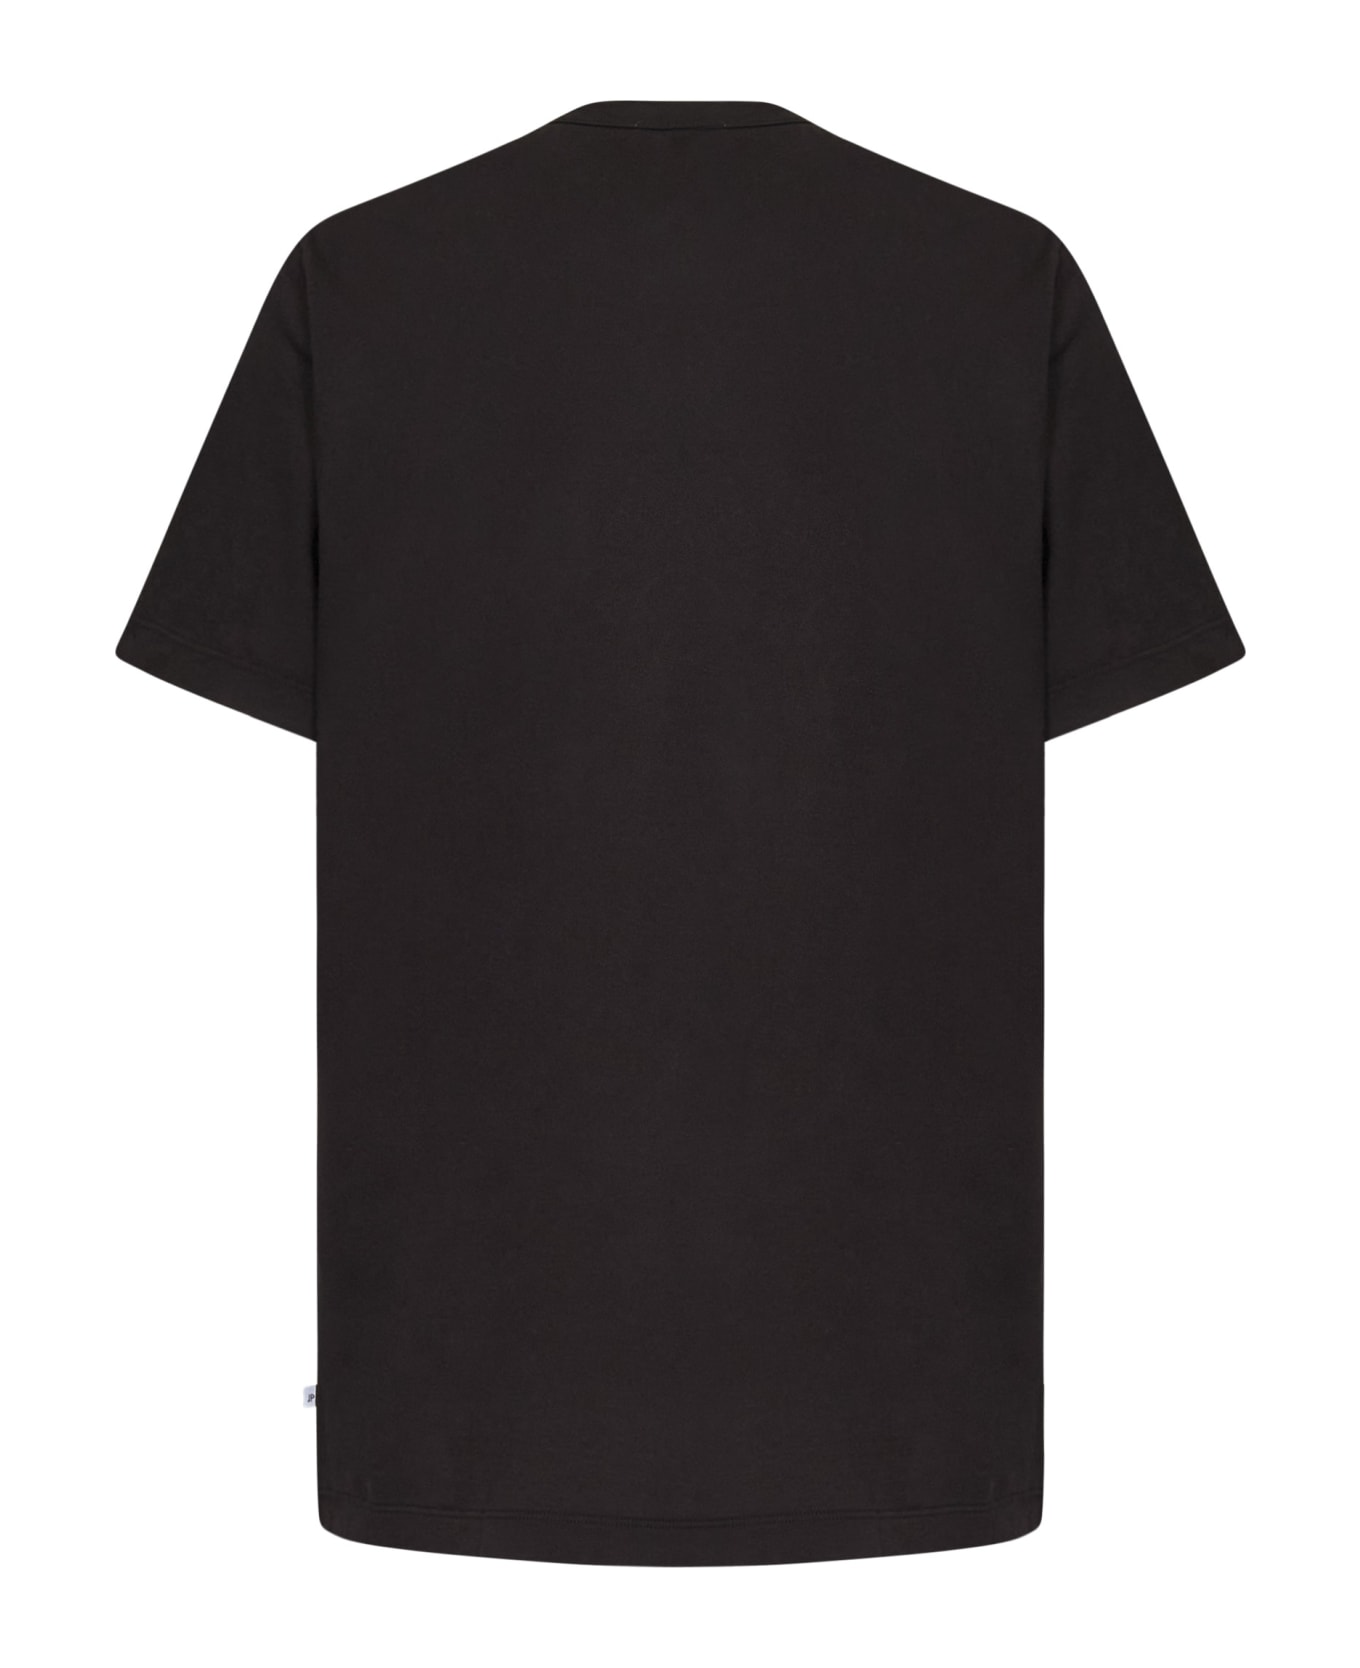 James Perse T-shirt - Brown